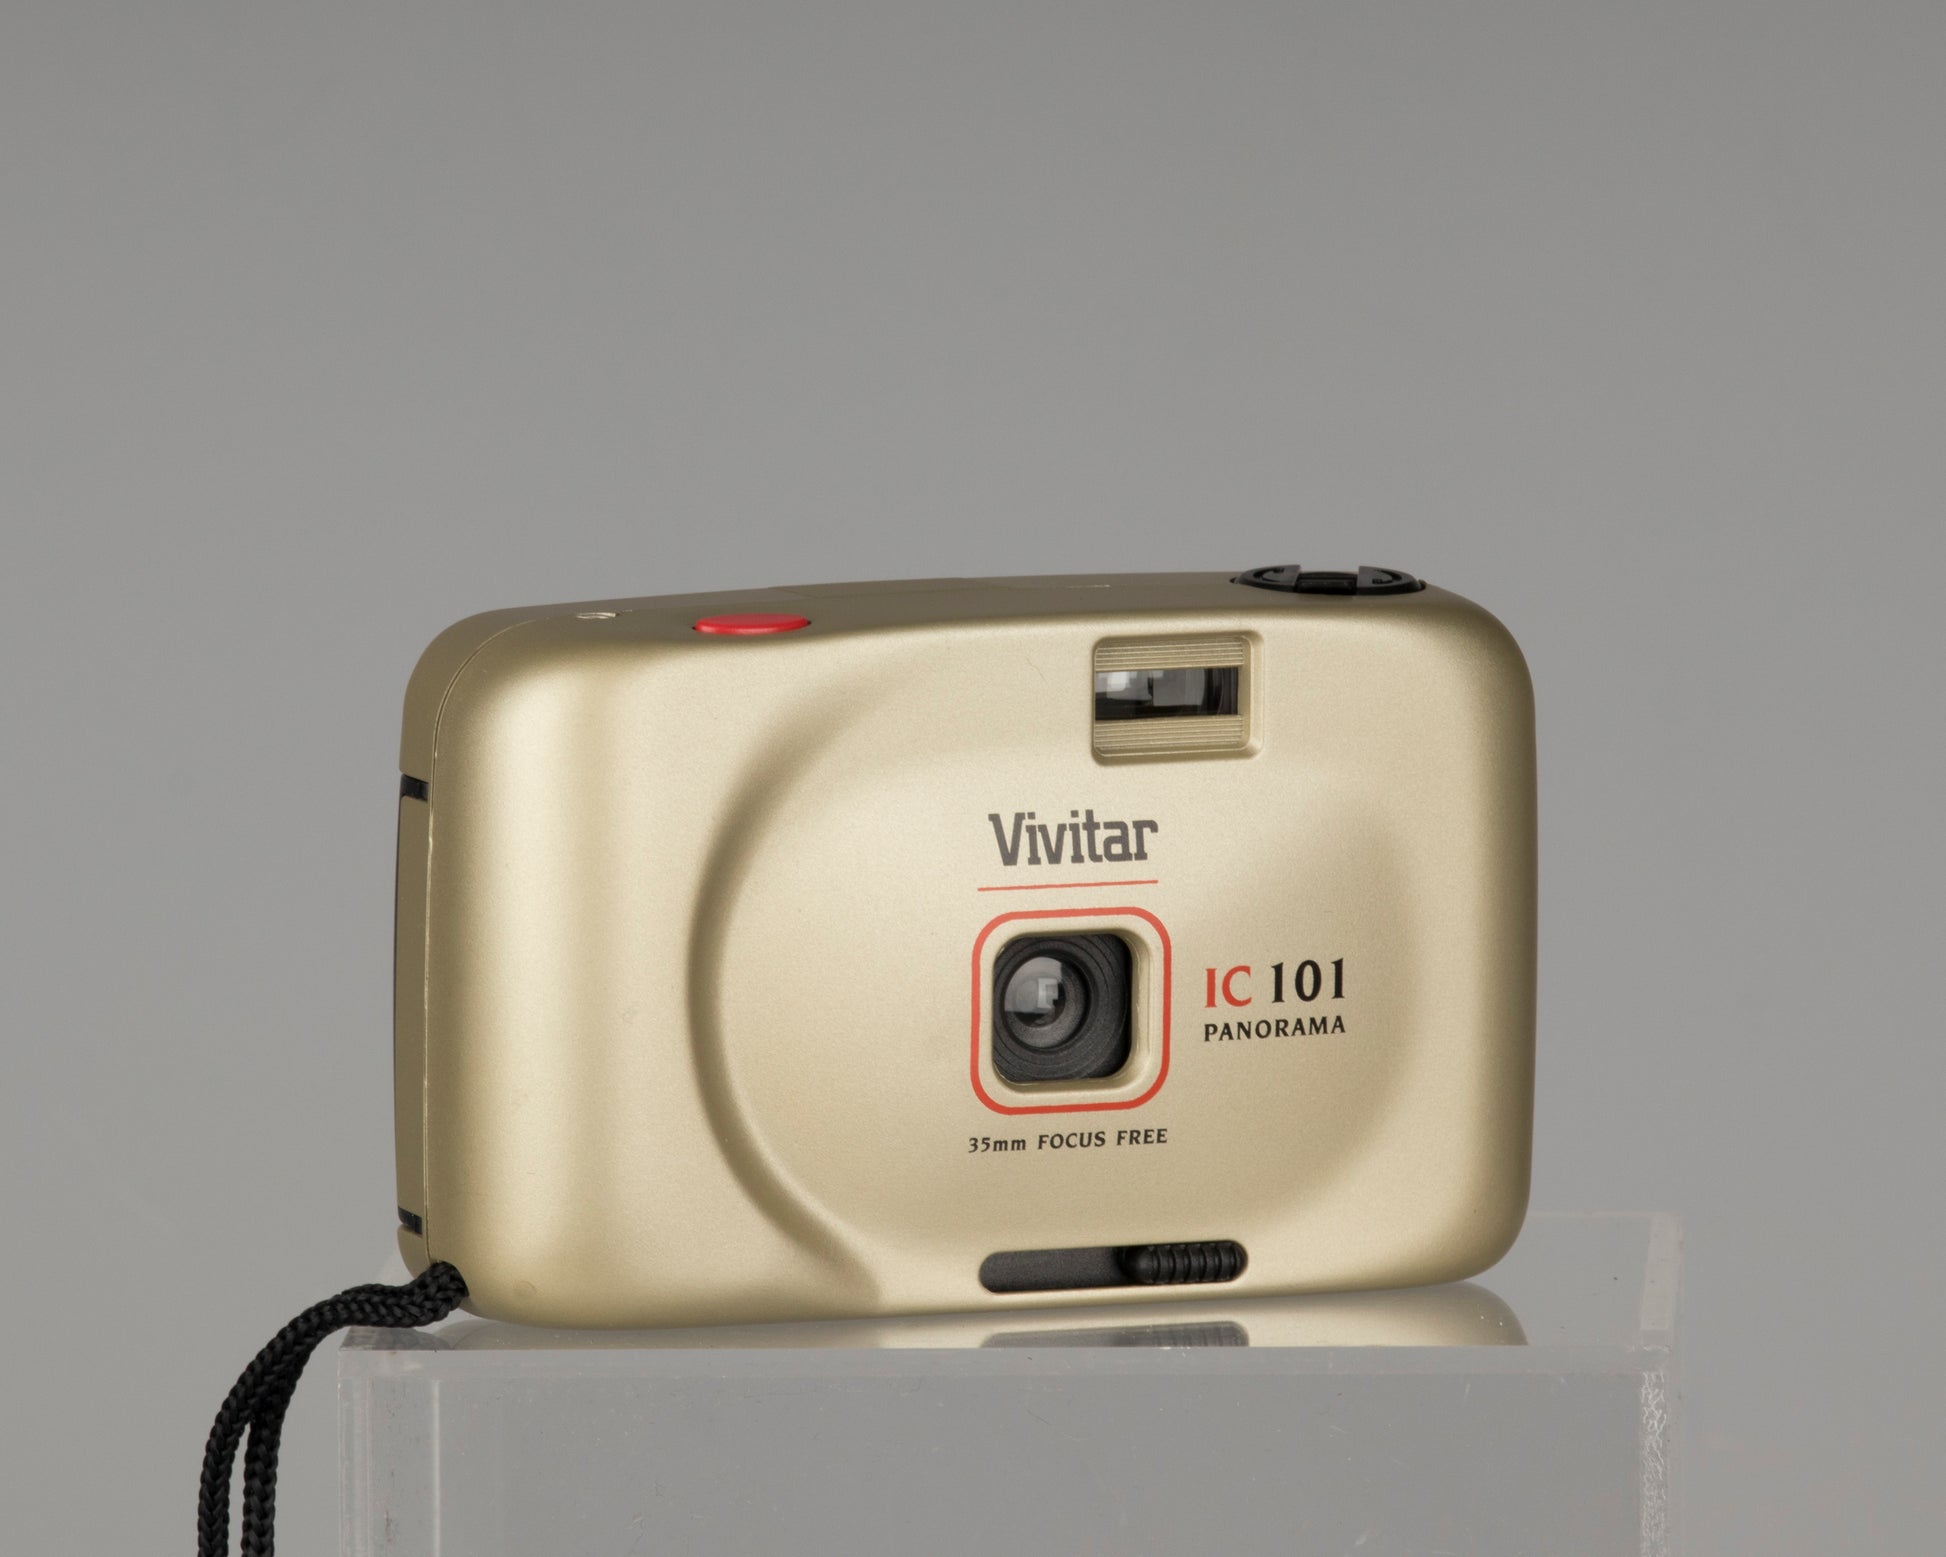 Vivitar IC 101 Panarama 35mm focus free camera